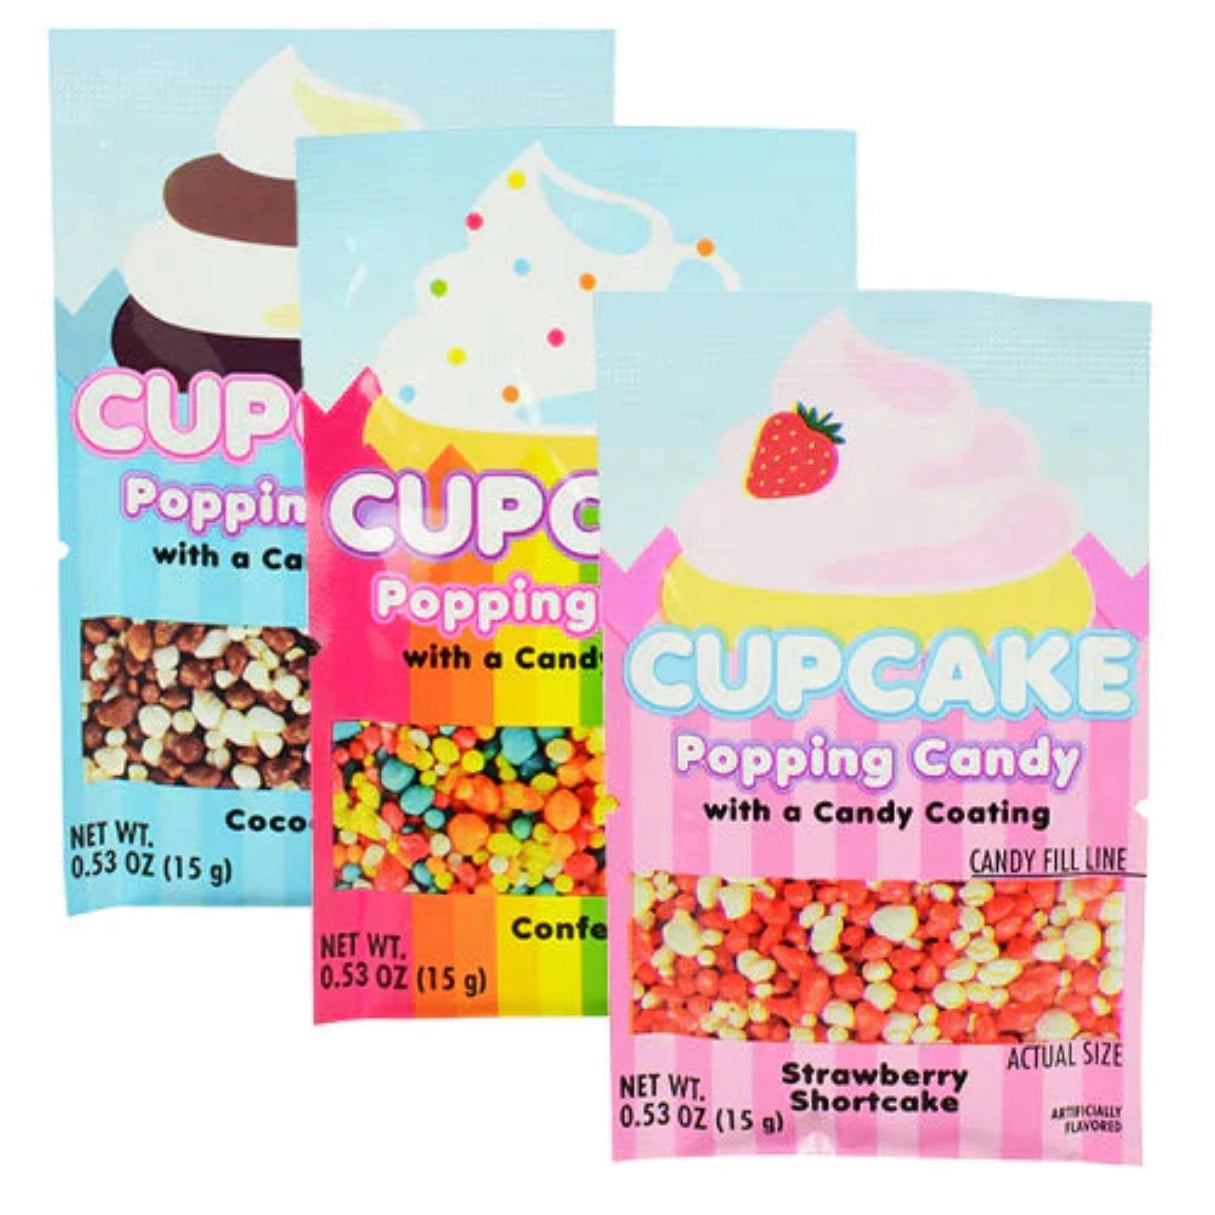 Koko's Cupcake Popping Candy .53oz - 20ct